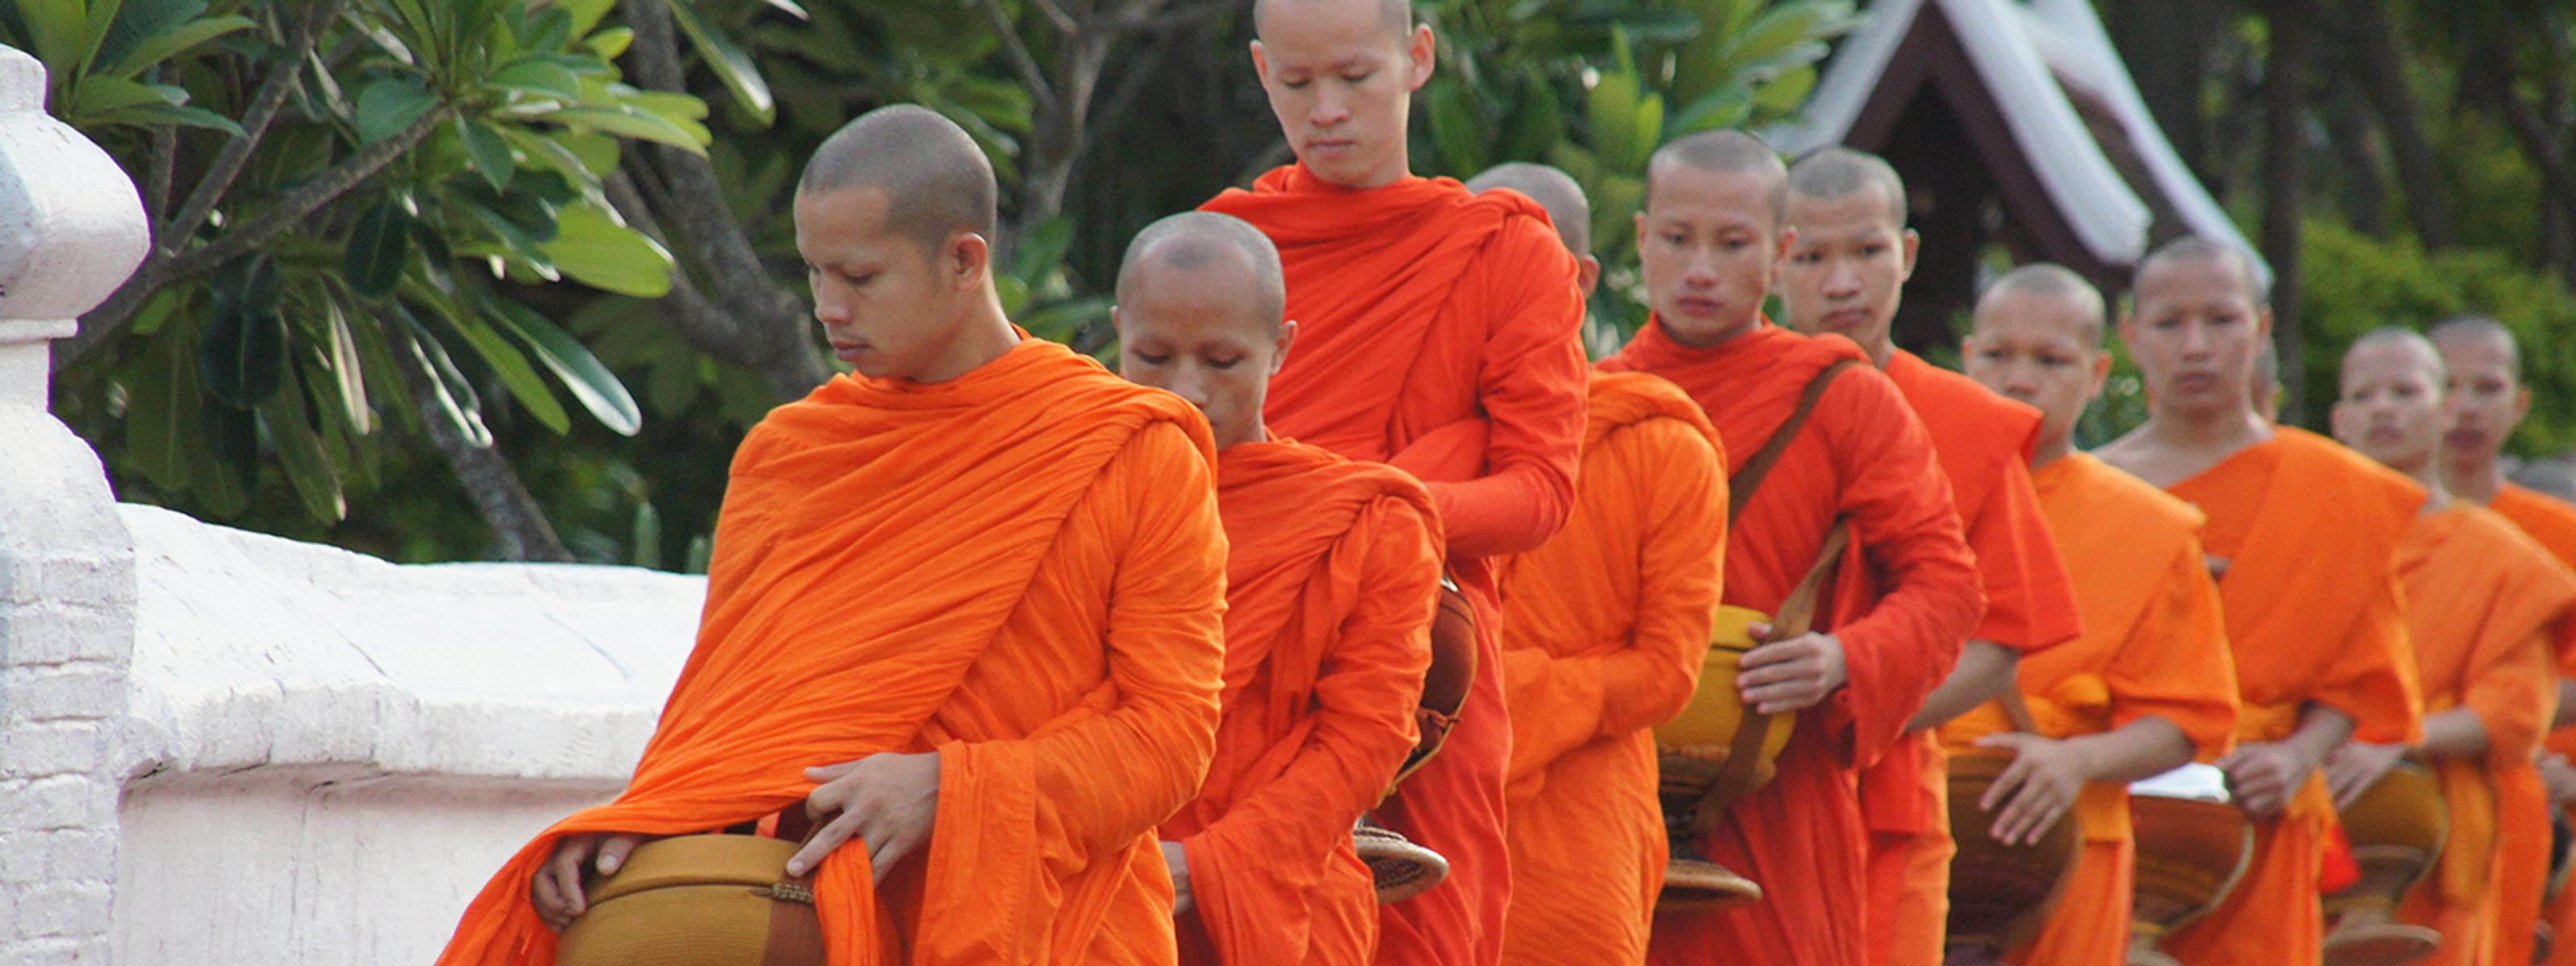 Mönche beim Allmosengang Luang Prabang 